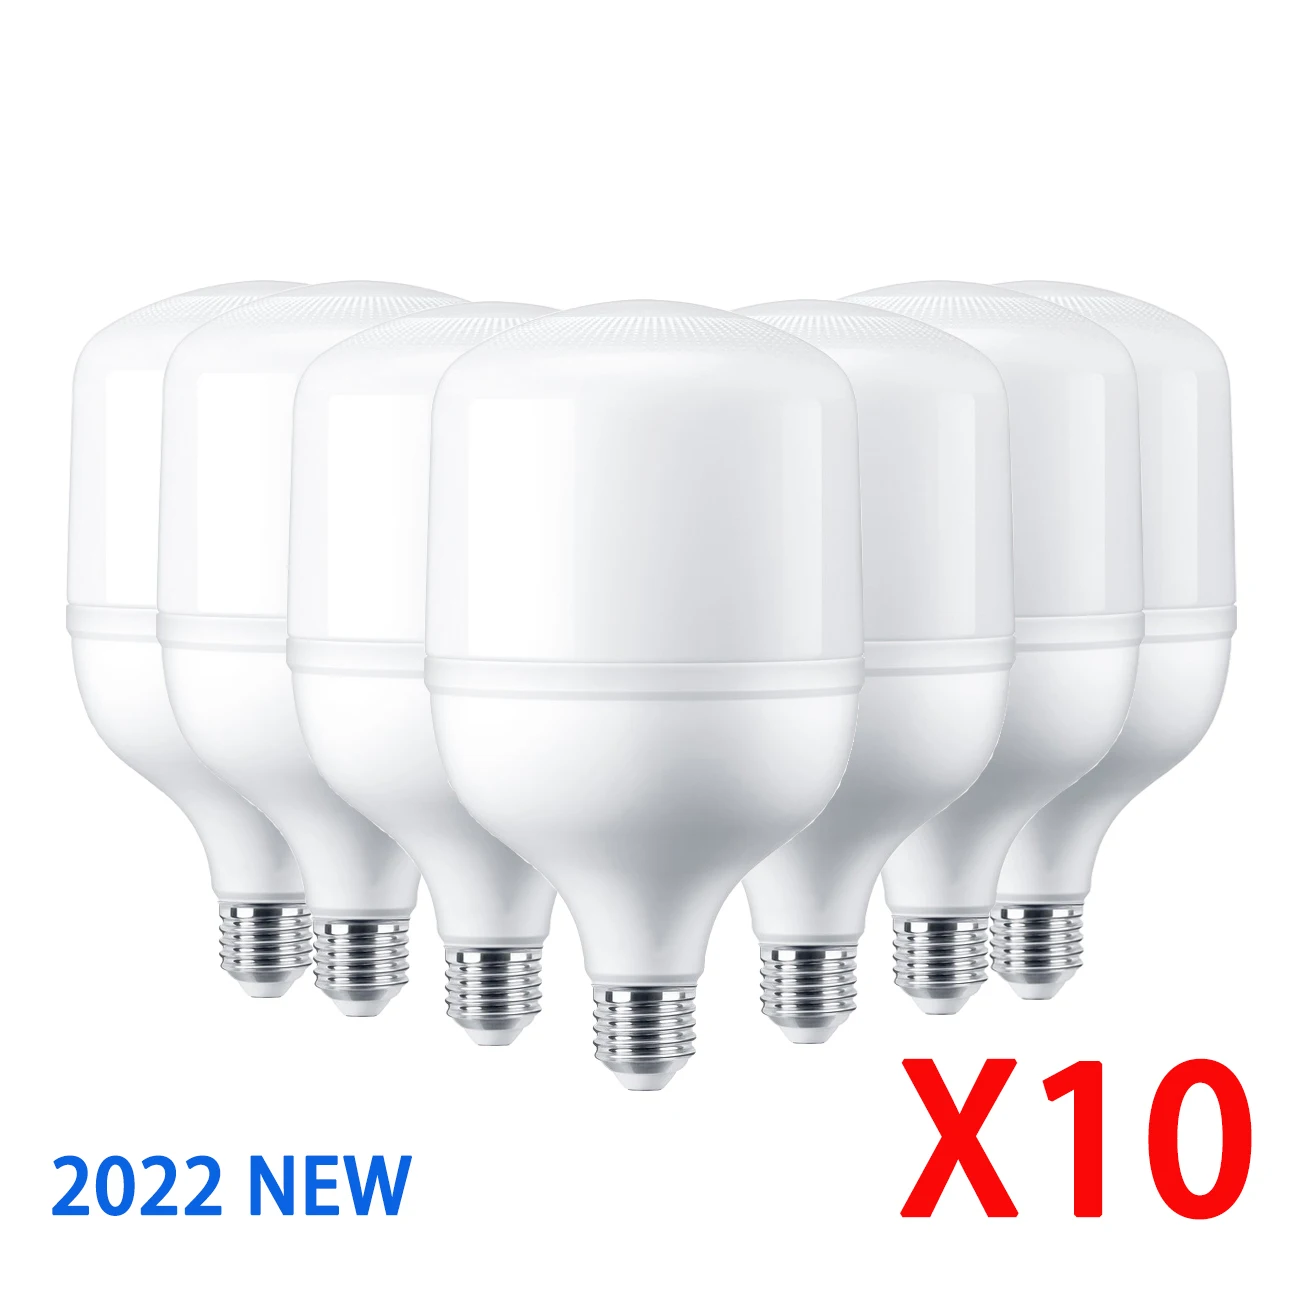 

10pcs/lot LED Bulb E27 E14 60W 50W 40W 30W 20W 15W 10W 7W 5W 3W Lampada LED Light AC 220V Bombilla Spotlight Lighting Lamp